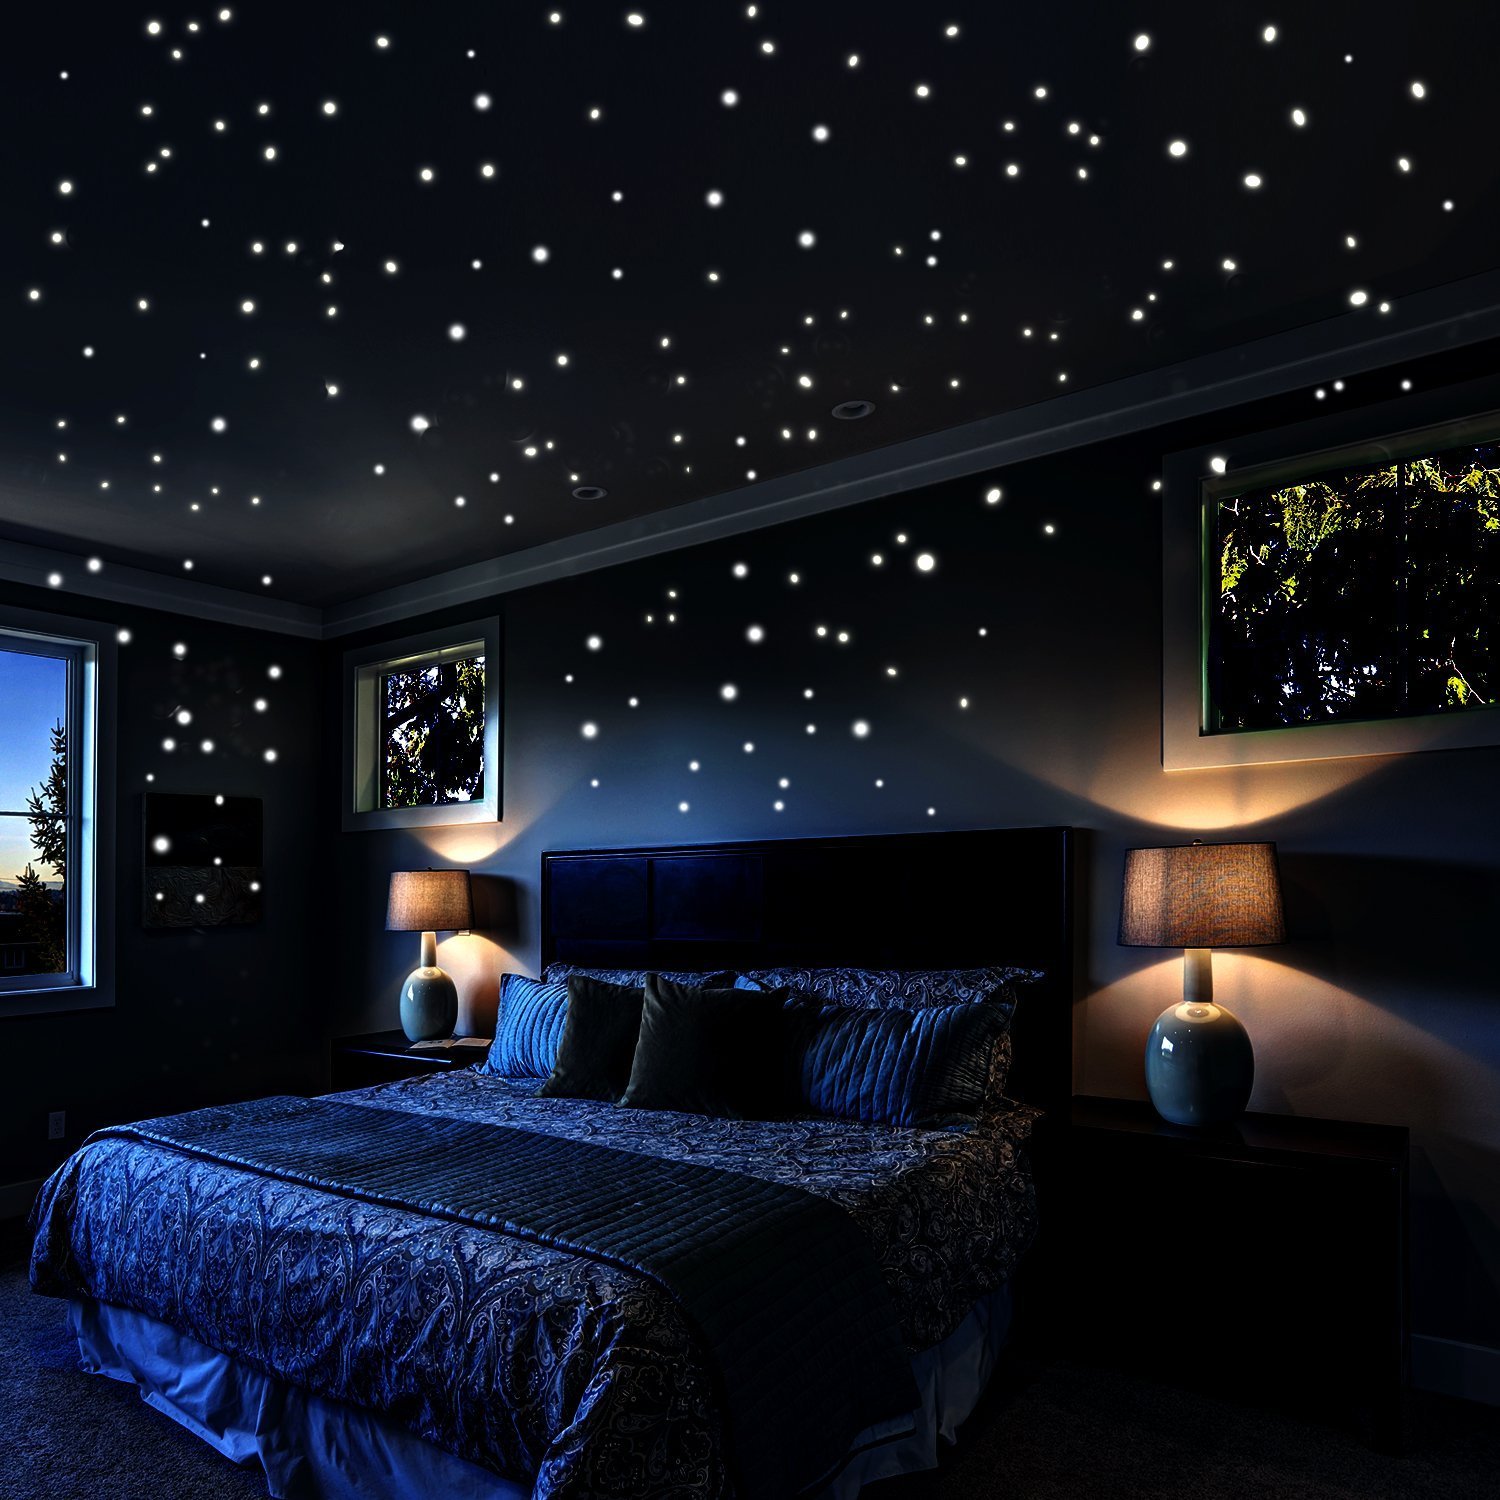 Домашнее звездное небо. Потолок Дабл Вижн звездное небо. Натяжной потолок звездное небо. Звездное небо в комнате. Натяжной потолок со звездами.